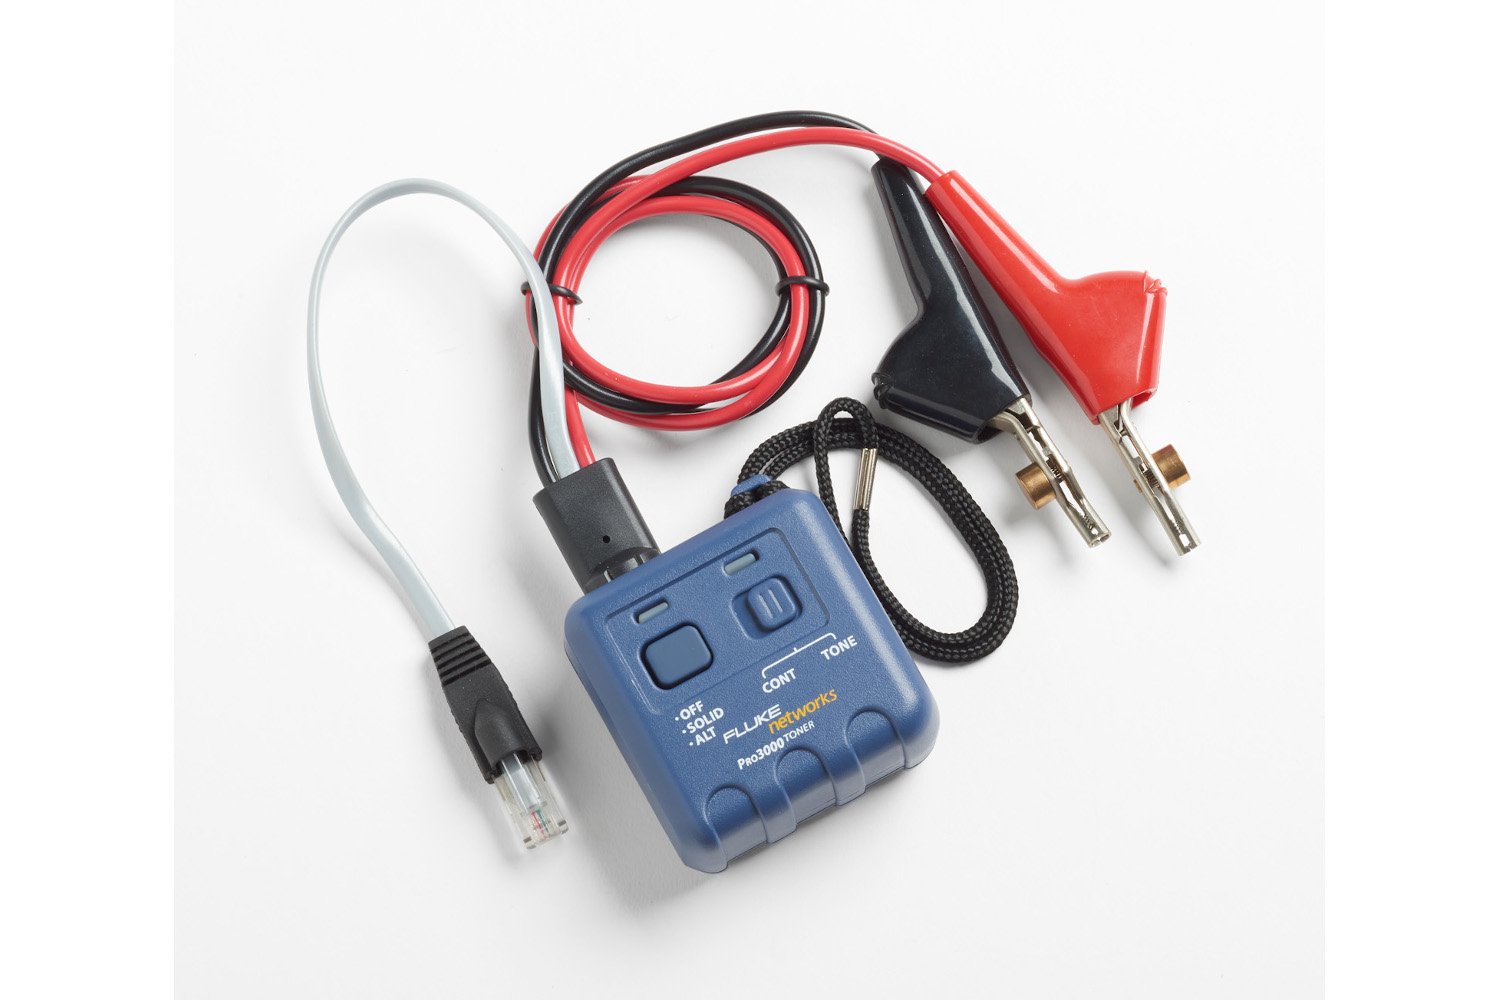 Fluke Networks 26000900 Pro3000 Tone Generator and Probe Kit for sale online